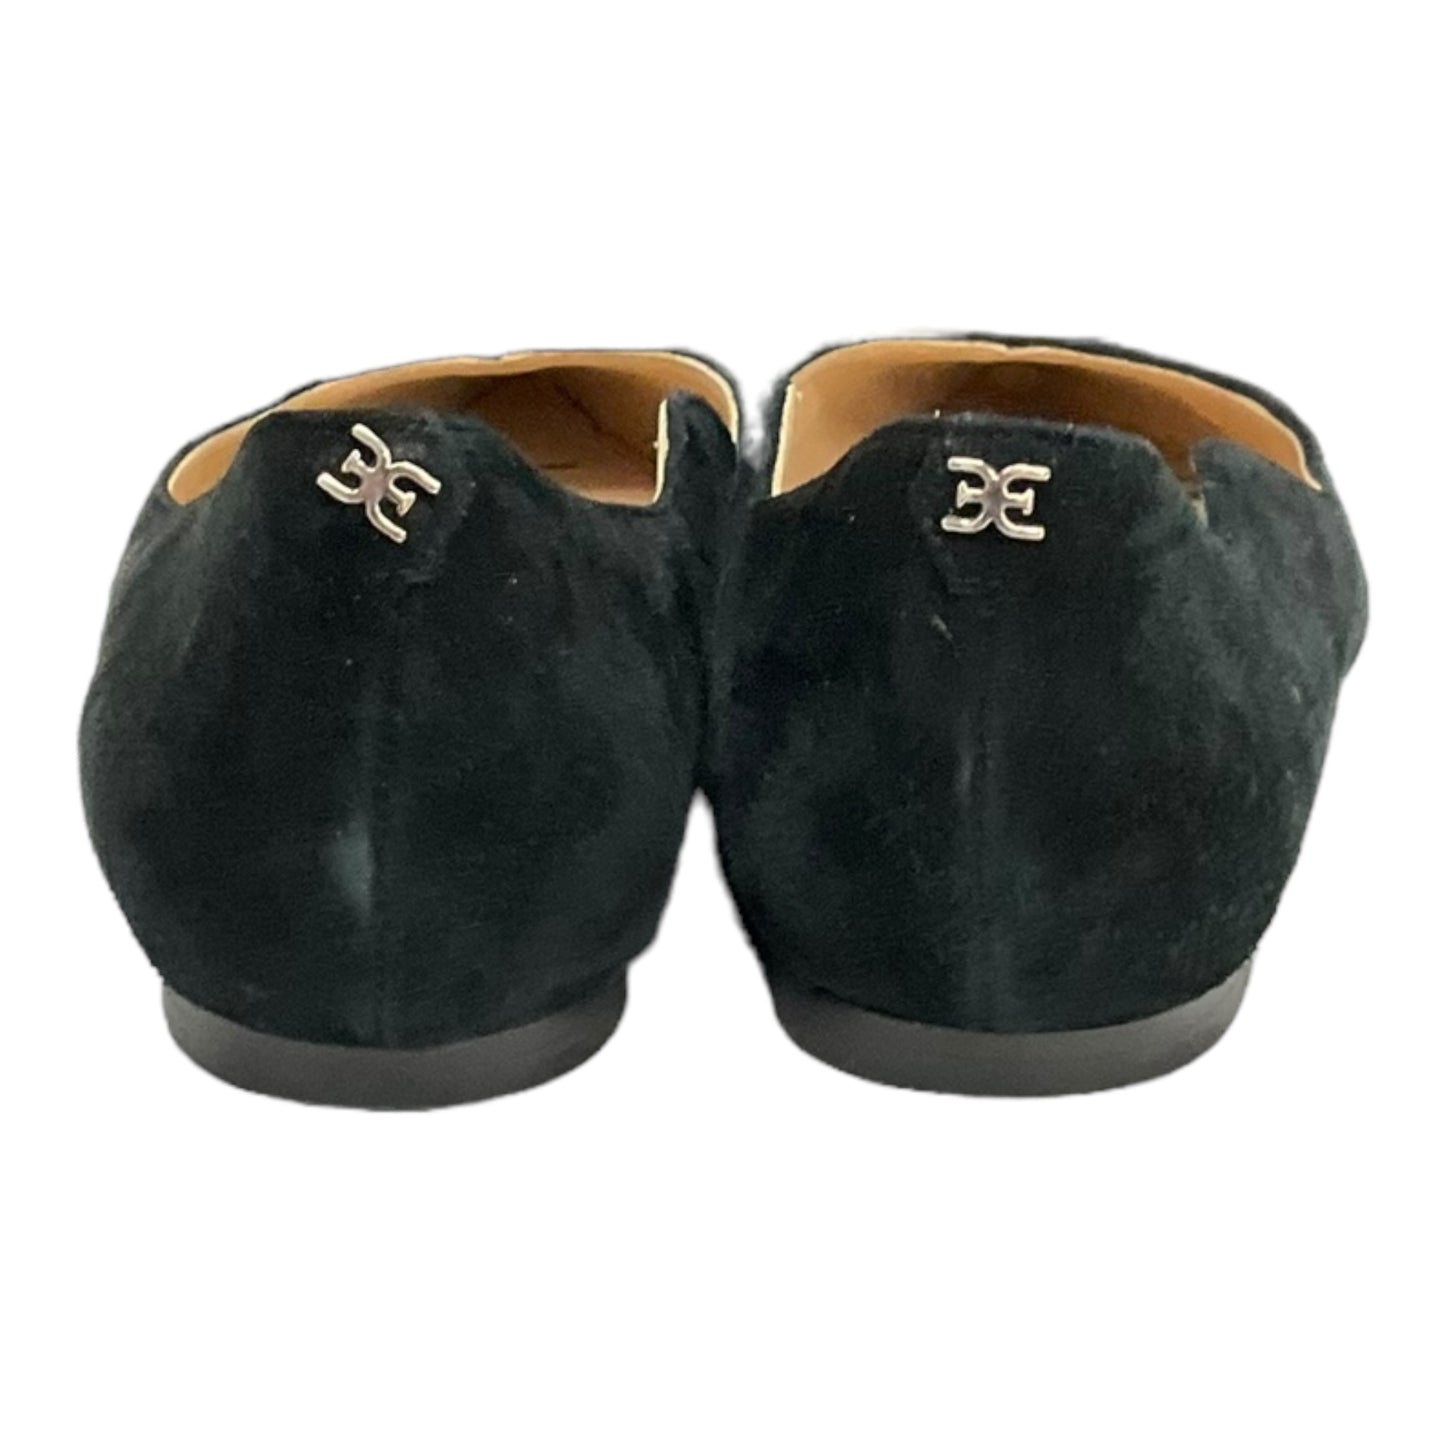 Shoes Flats Ballet By Sam Edelman  Size: 7.5